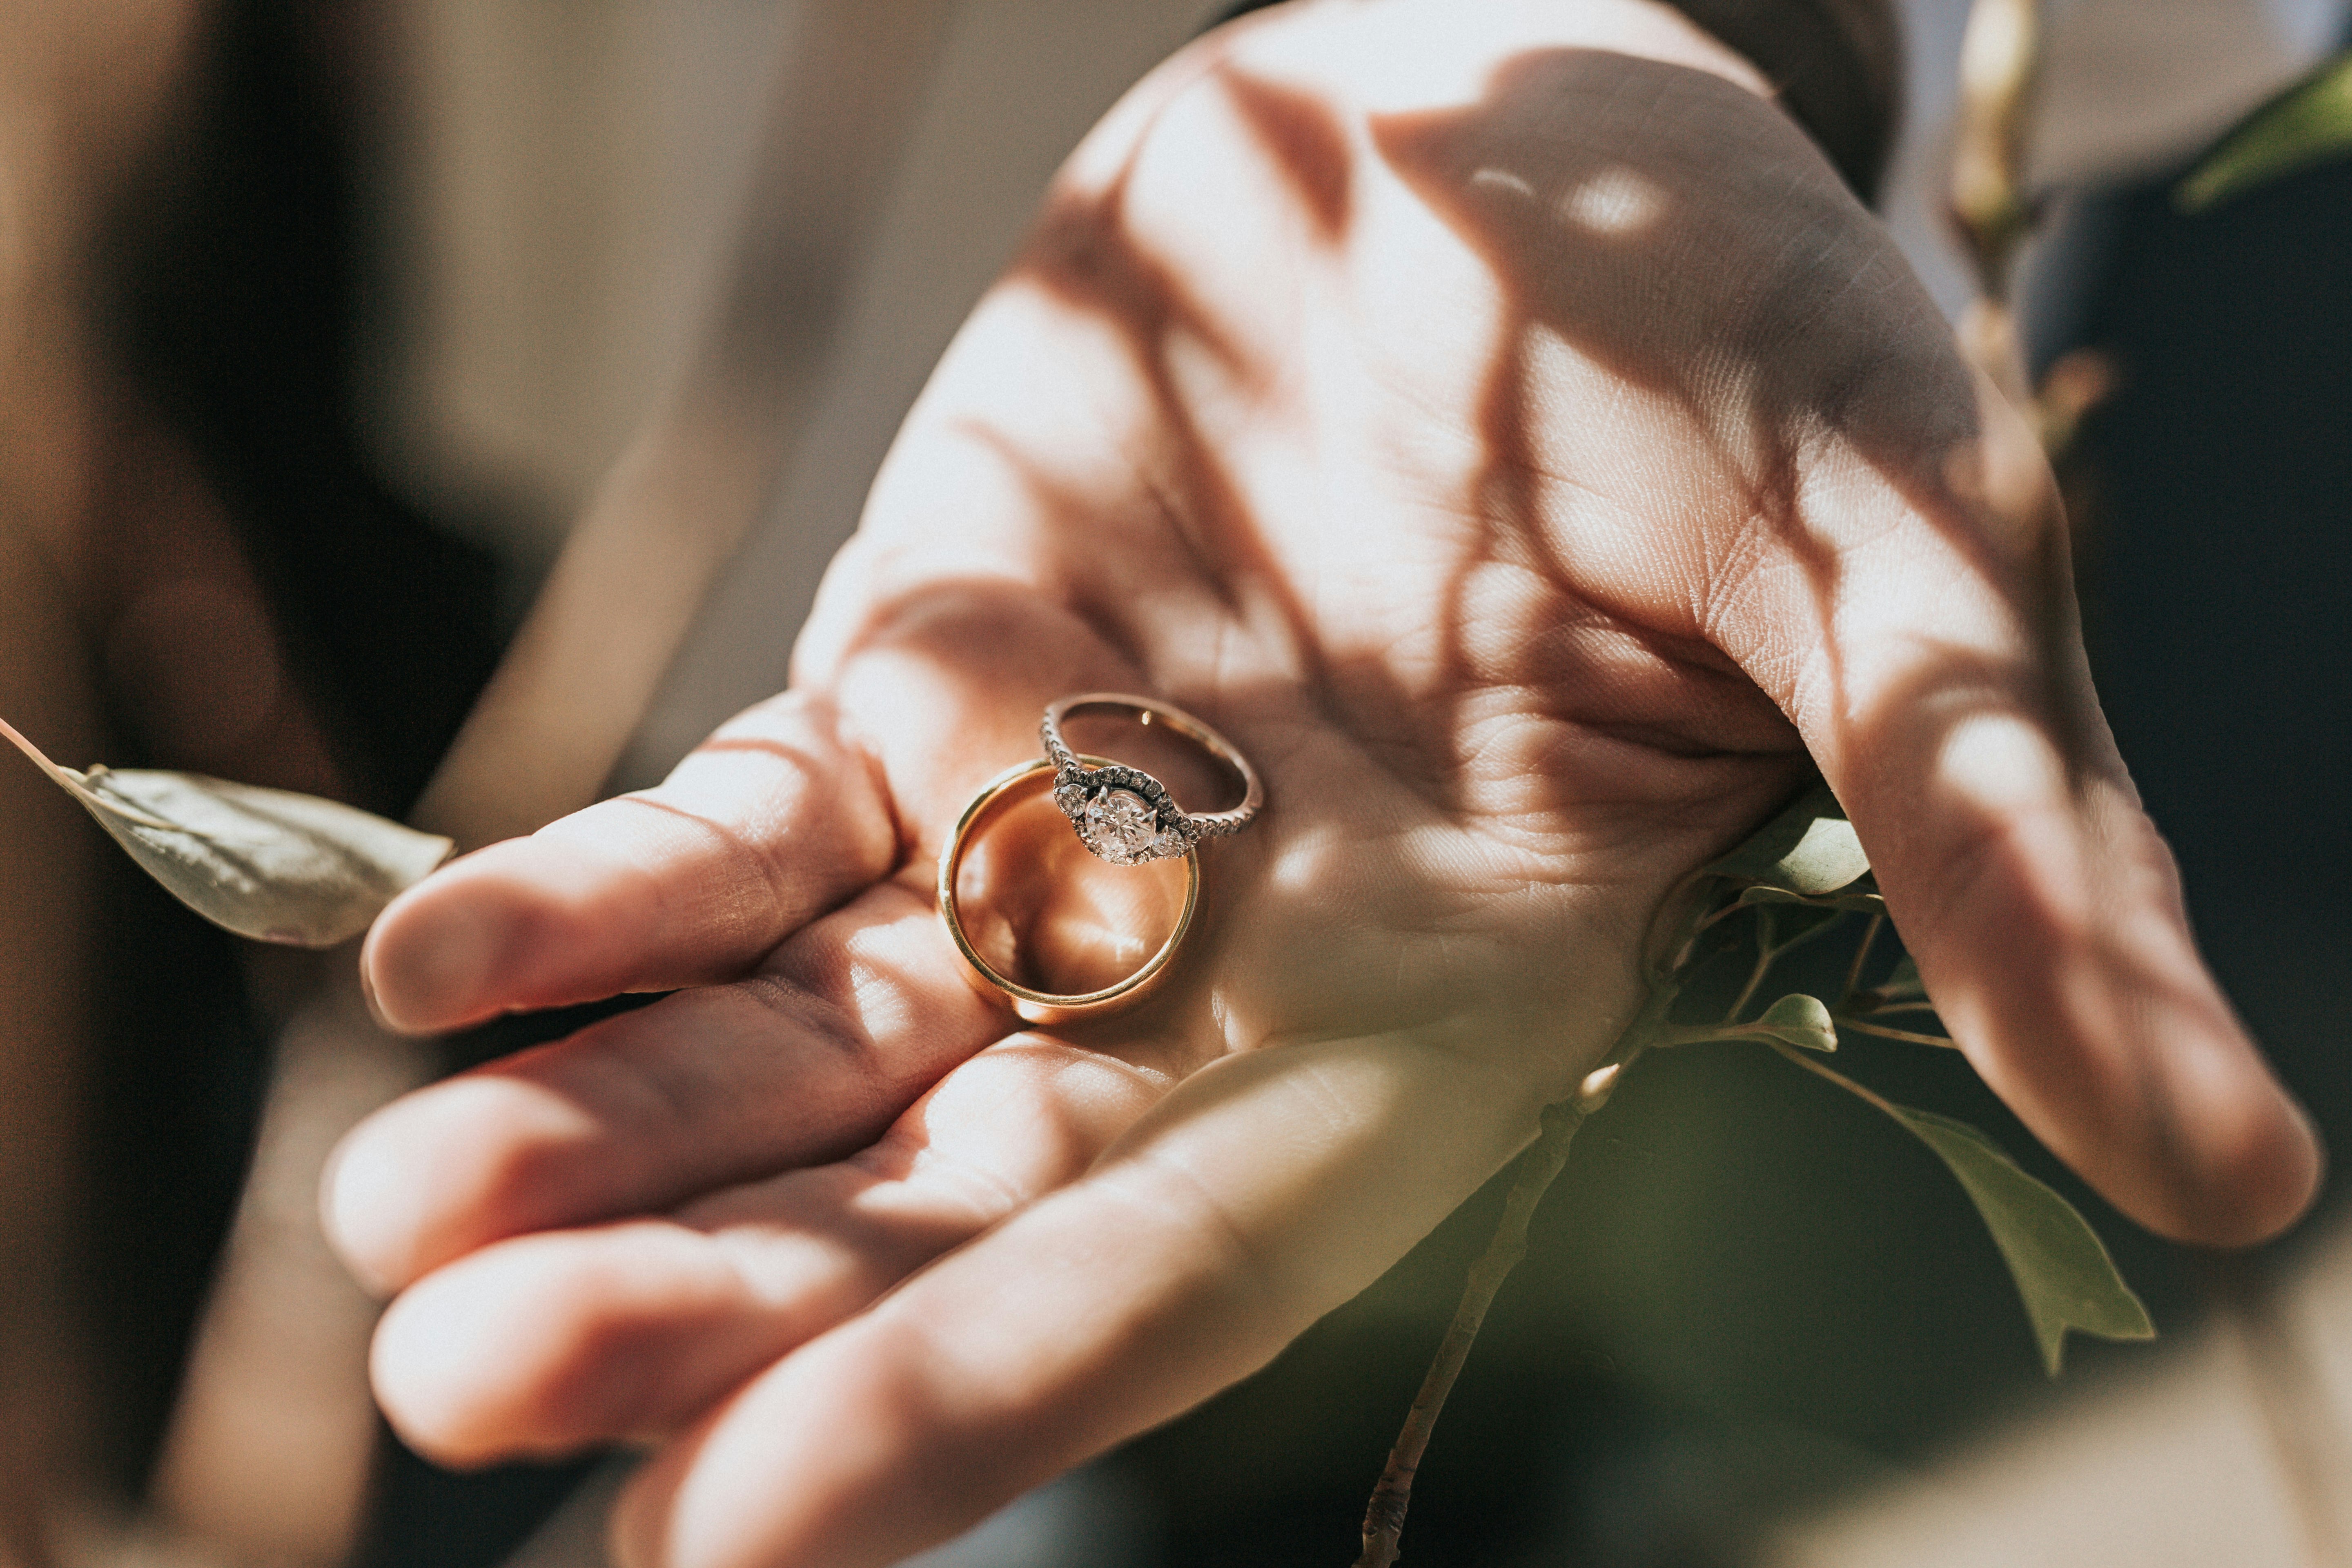 Una persona sujetando anillos | Fuente: Unsplash